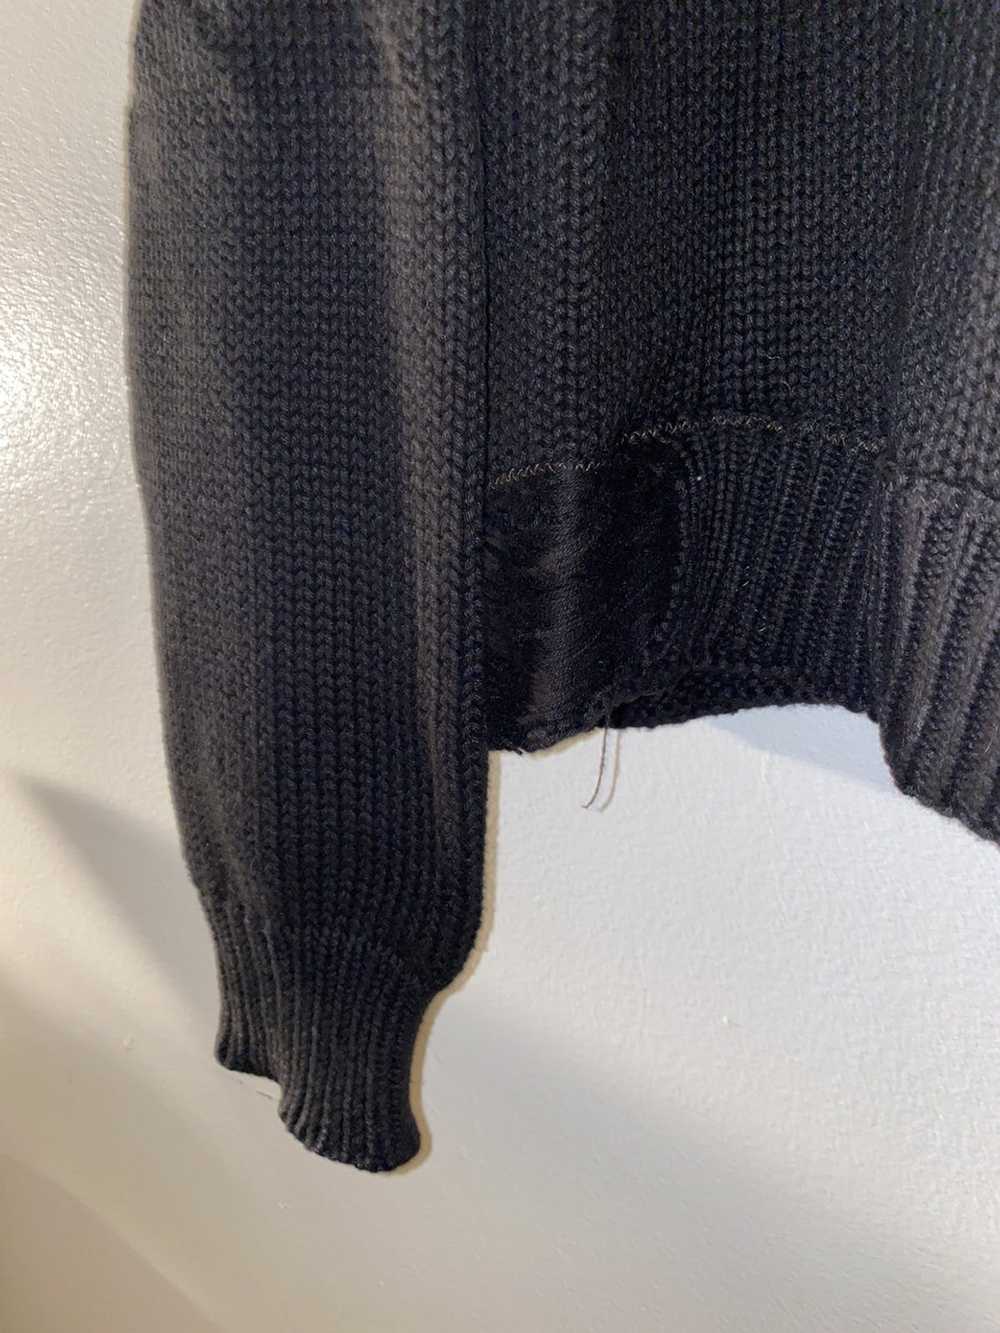 The People Vs Black Knitwear Sweater - image 6